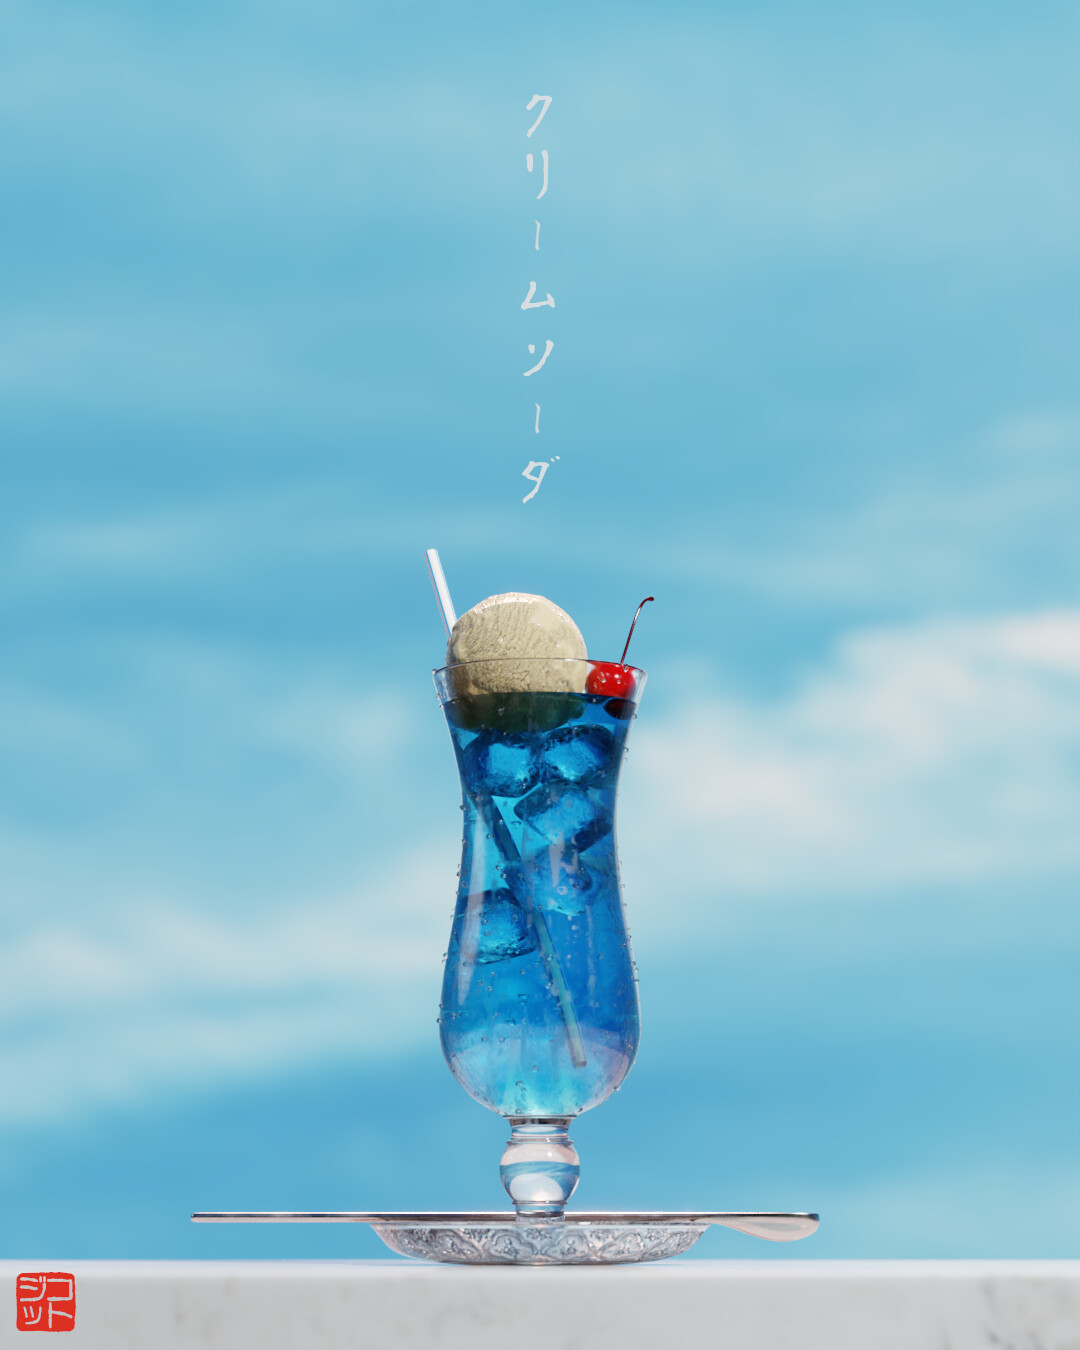 ArtStation - クリームソーダ - Cream soda in the sky